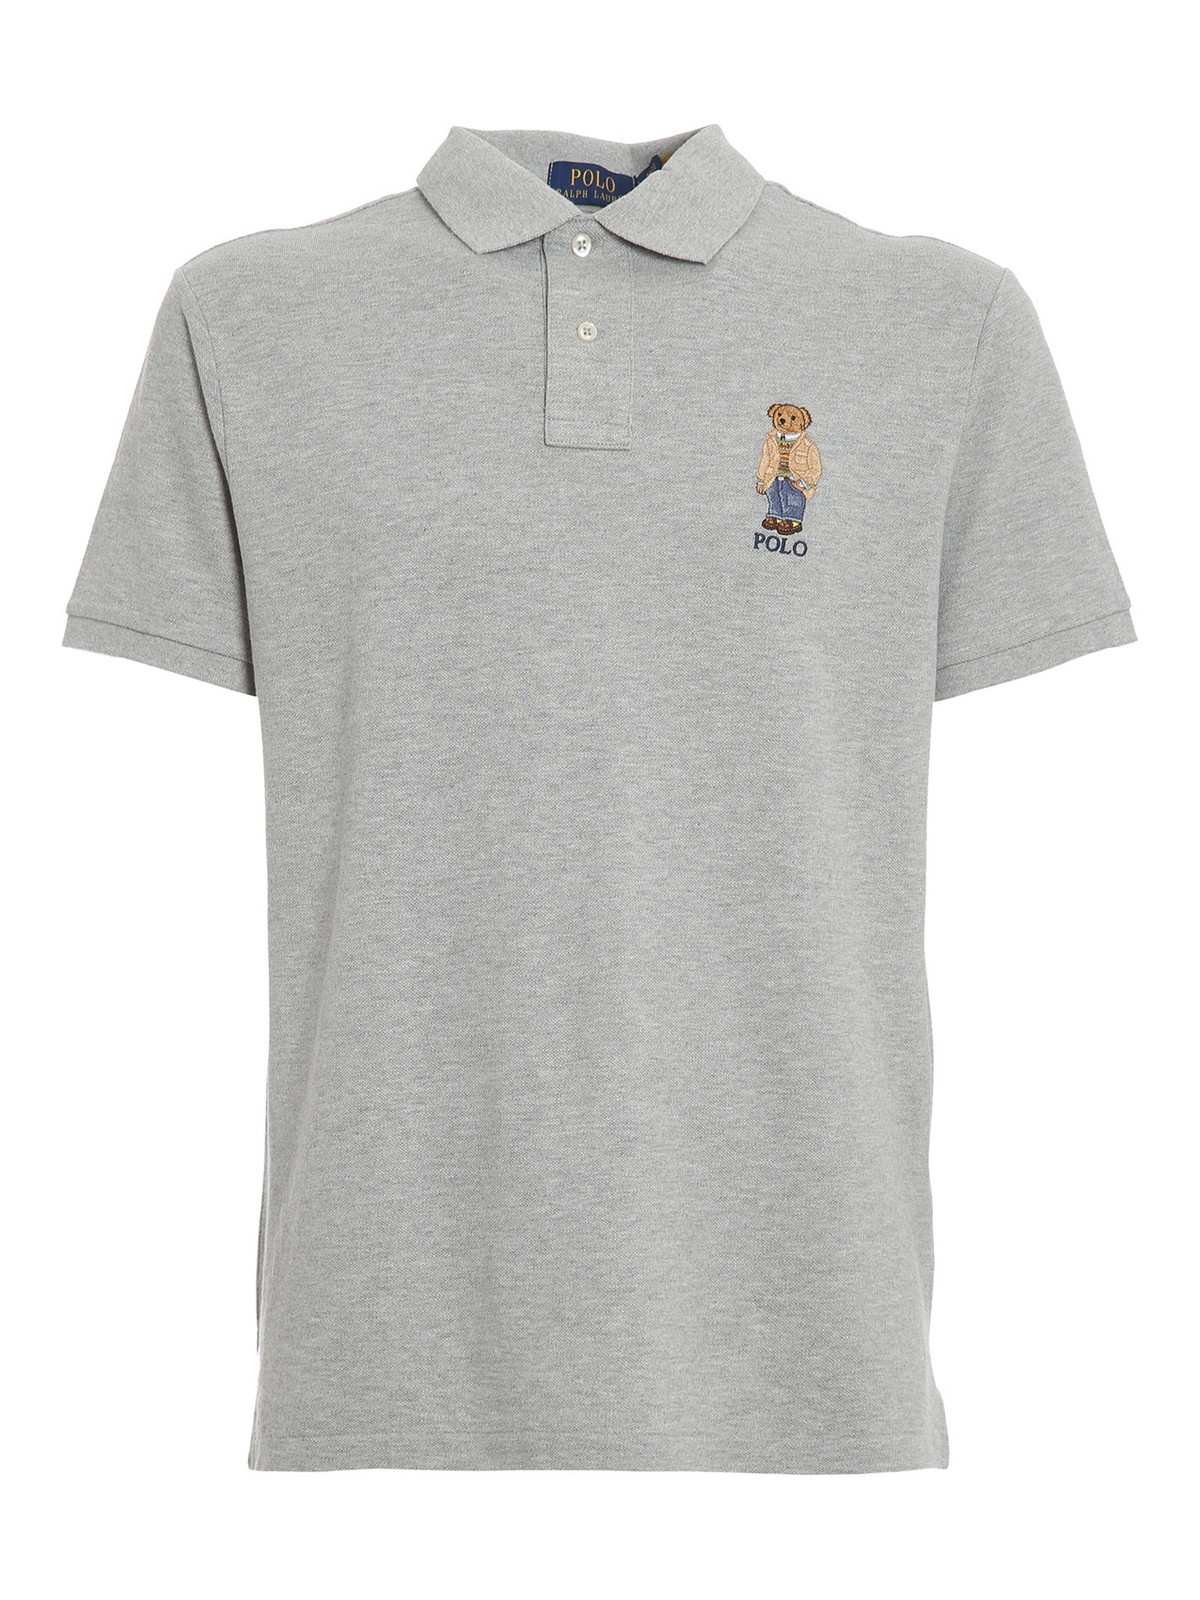 polo shirt with bear logo